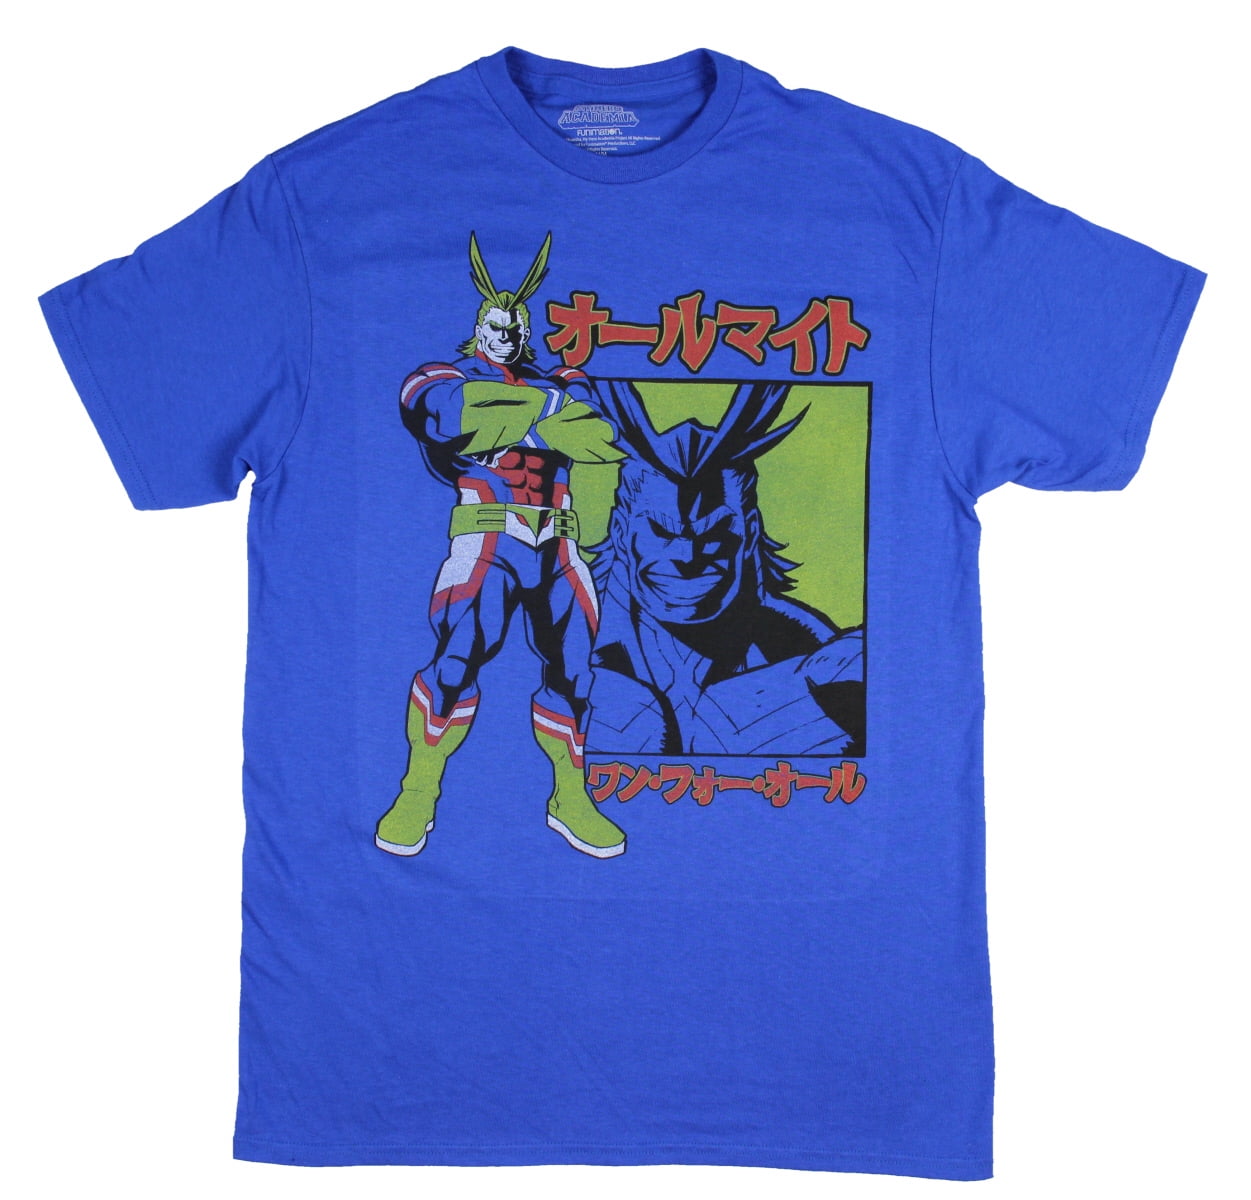 All Might Manga Strip My Hero Academia Anime Unisex Tshirt T-Shirt Tee ALL SIZES